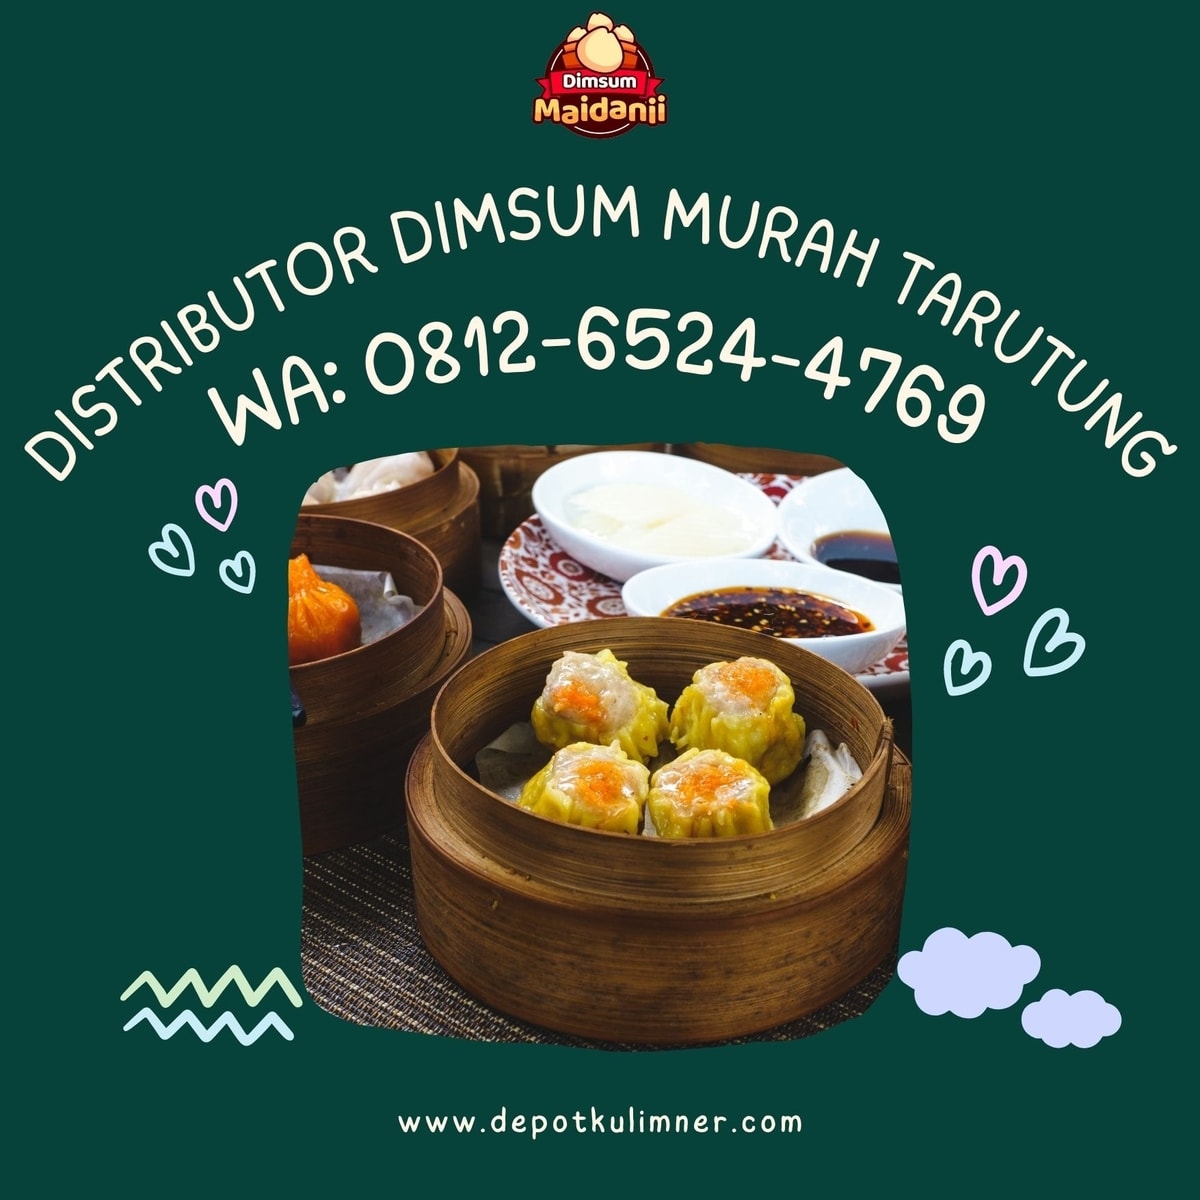 DISKON ABIS, Call 0812-6524-4769, Distributor Dimsum Murah Tarutung